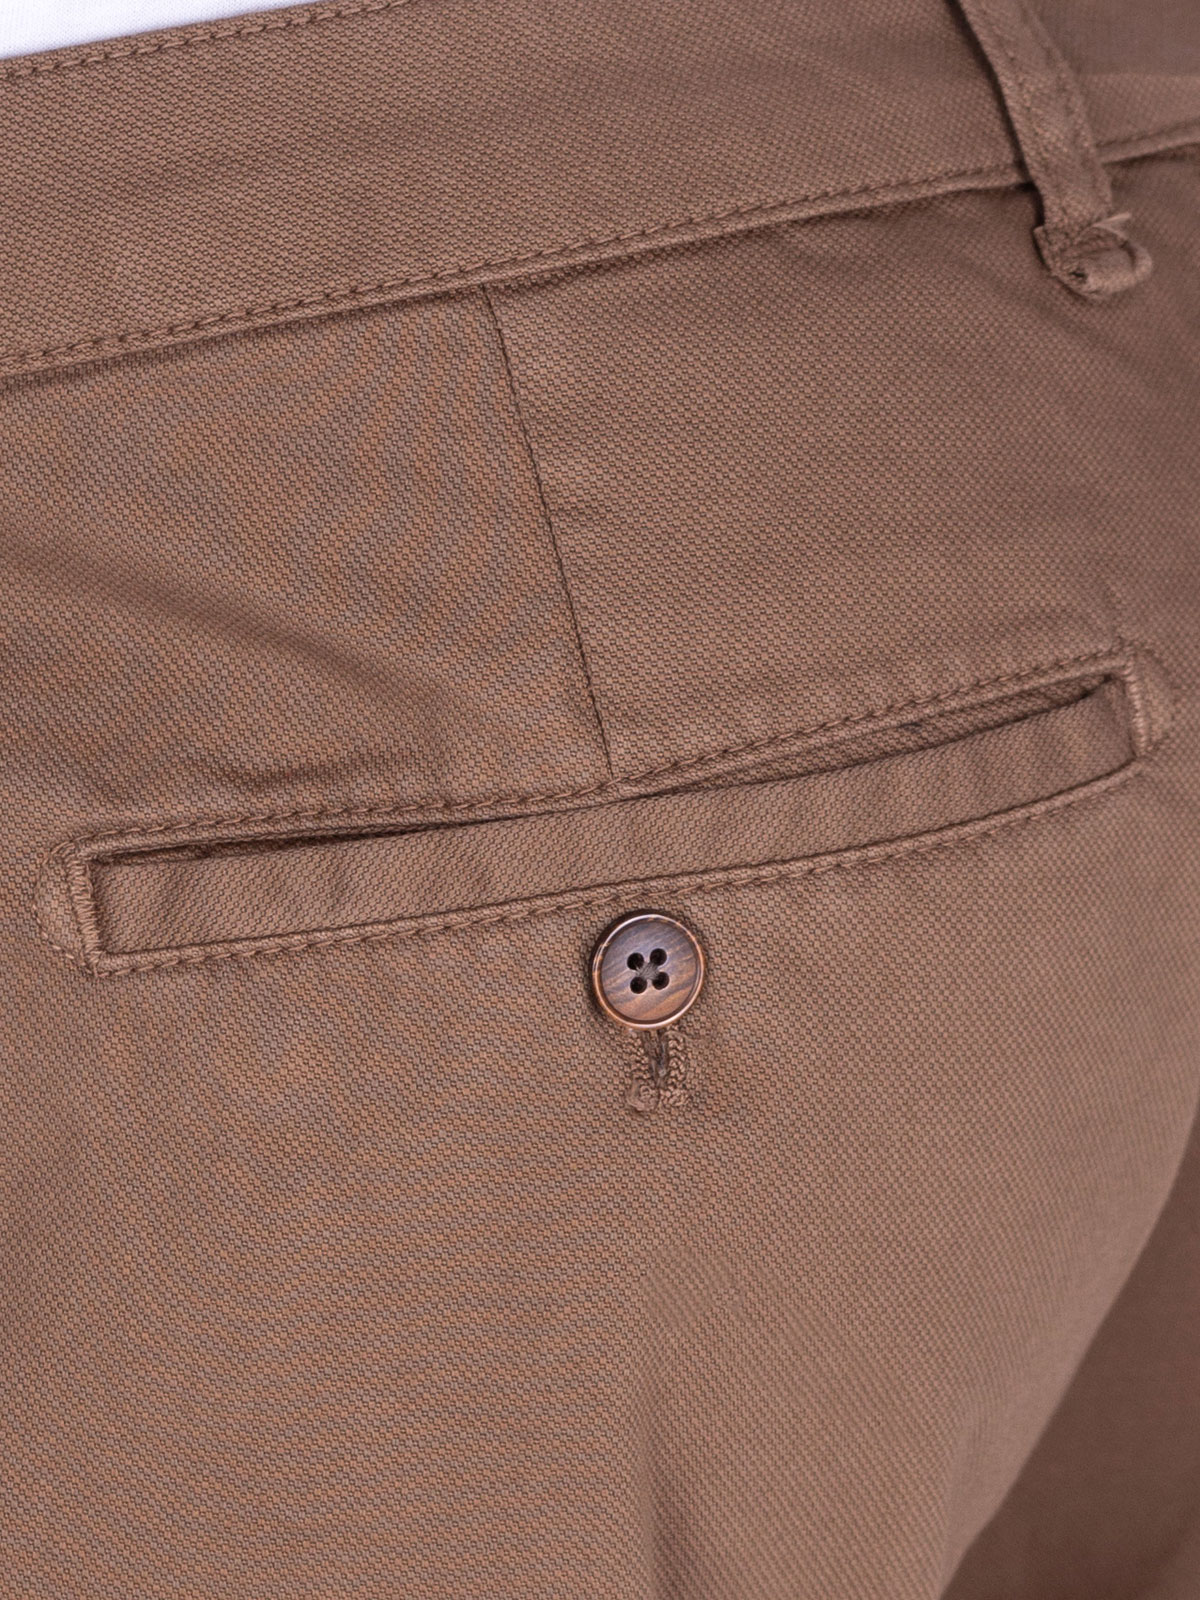 BRUNELLO CUCINELLI: trousers for men - Camel | Brunello Cucinelli trousers  M247DE1450 online at GIGLIO.COM